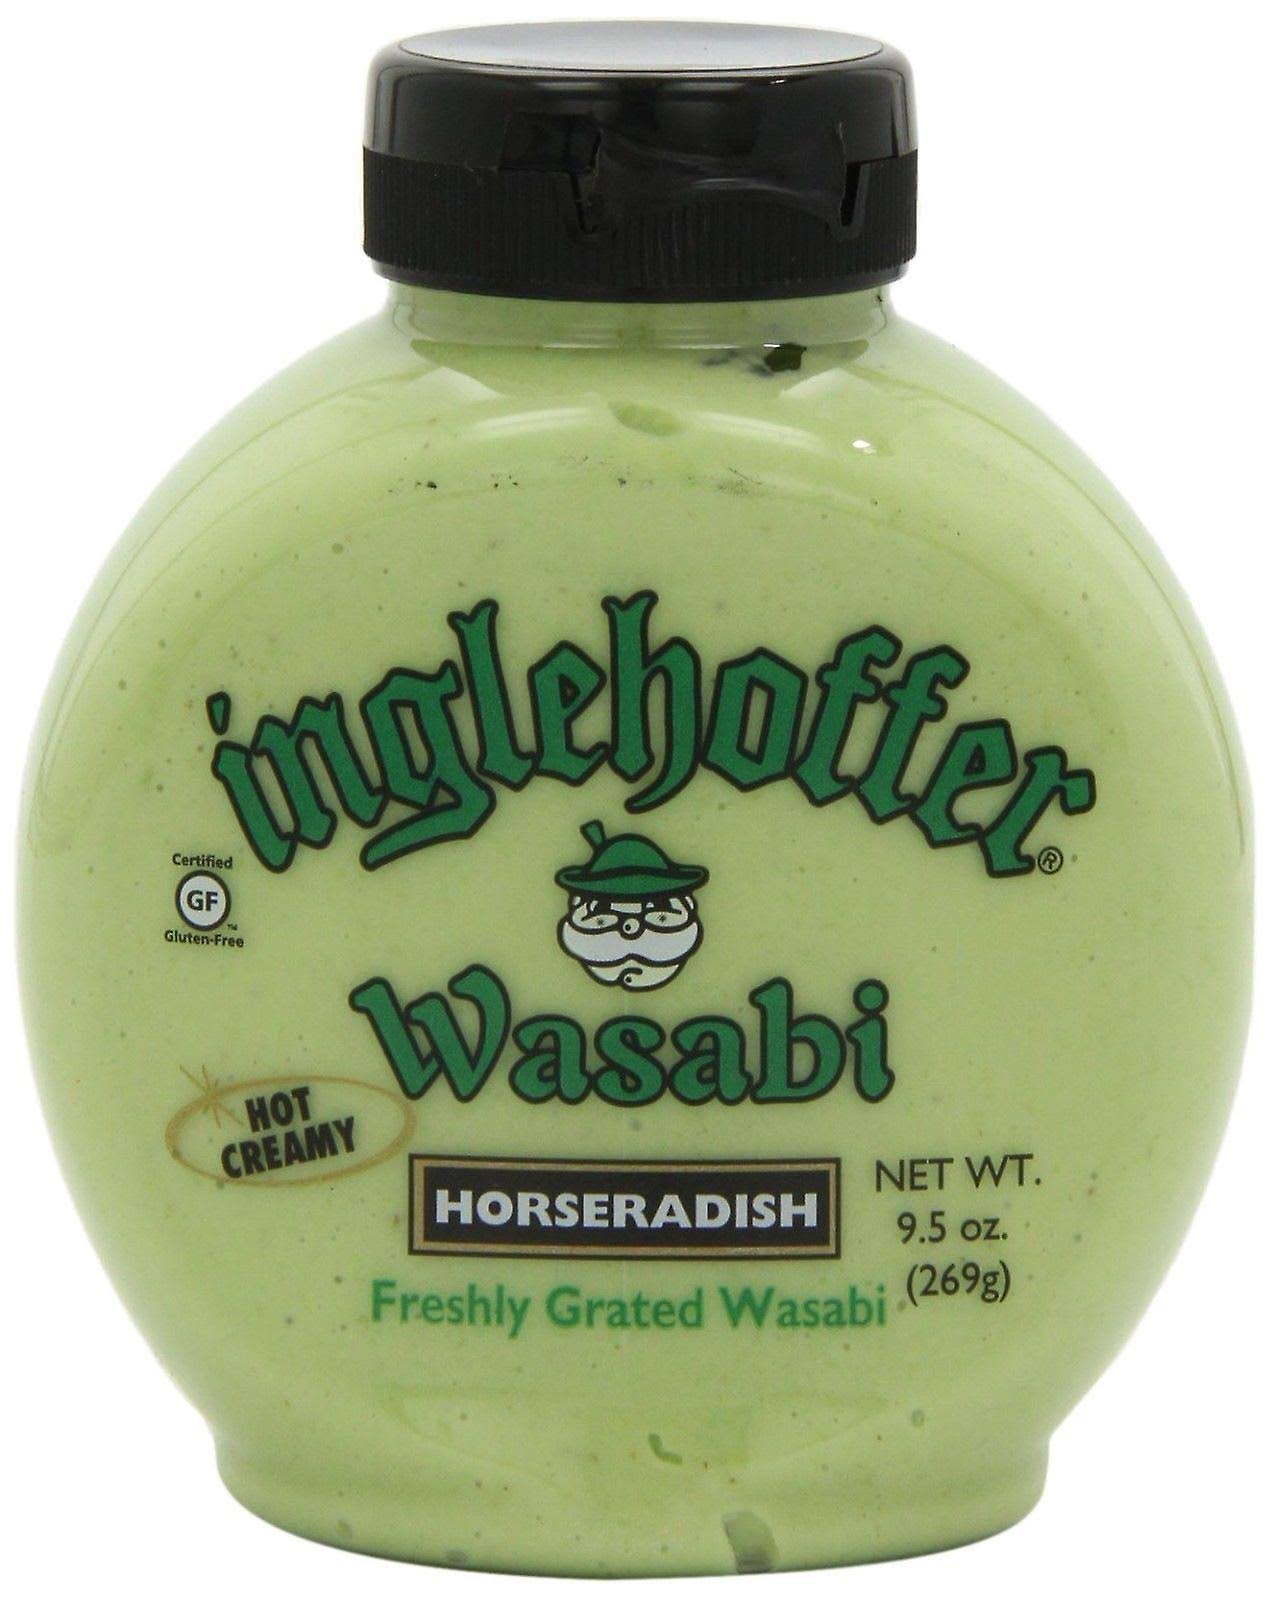 Inglehoffer Horseradish Squeeze Wasabi - 9.5oz